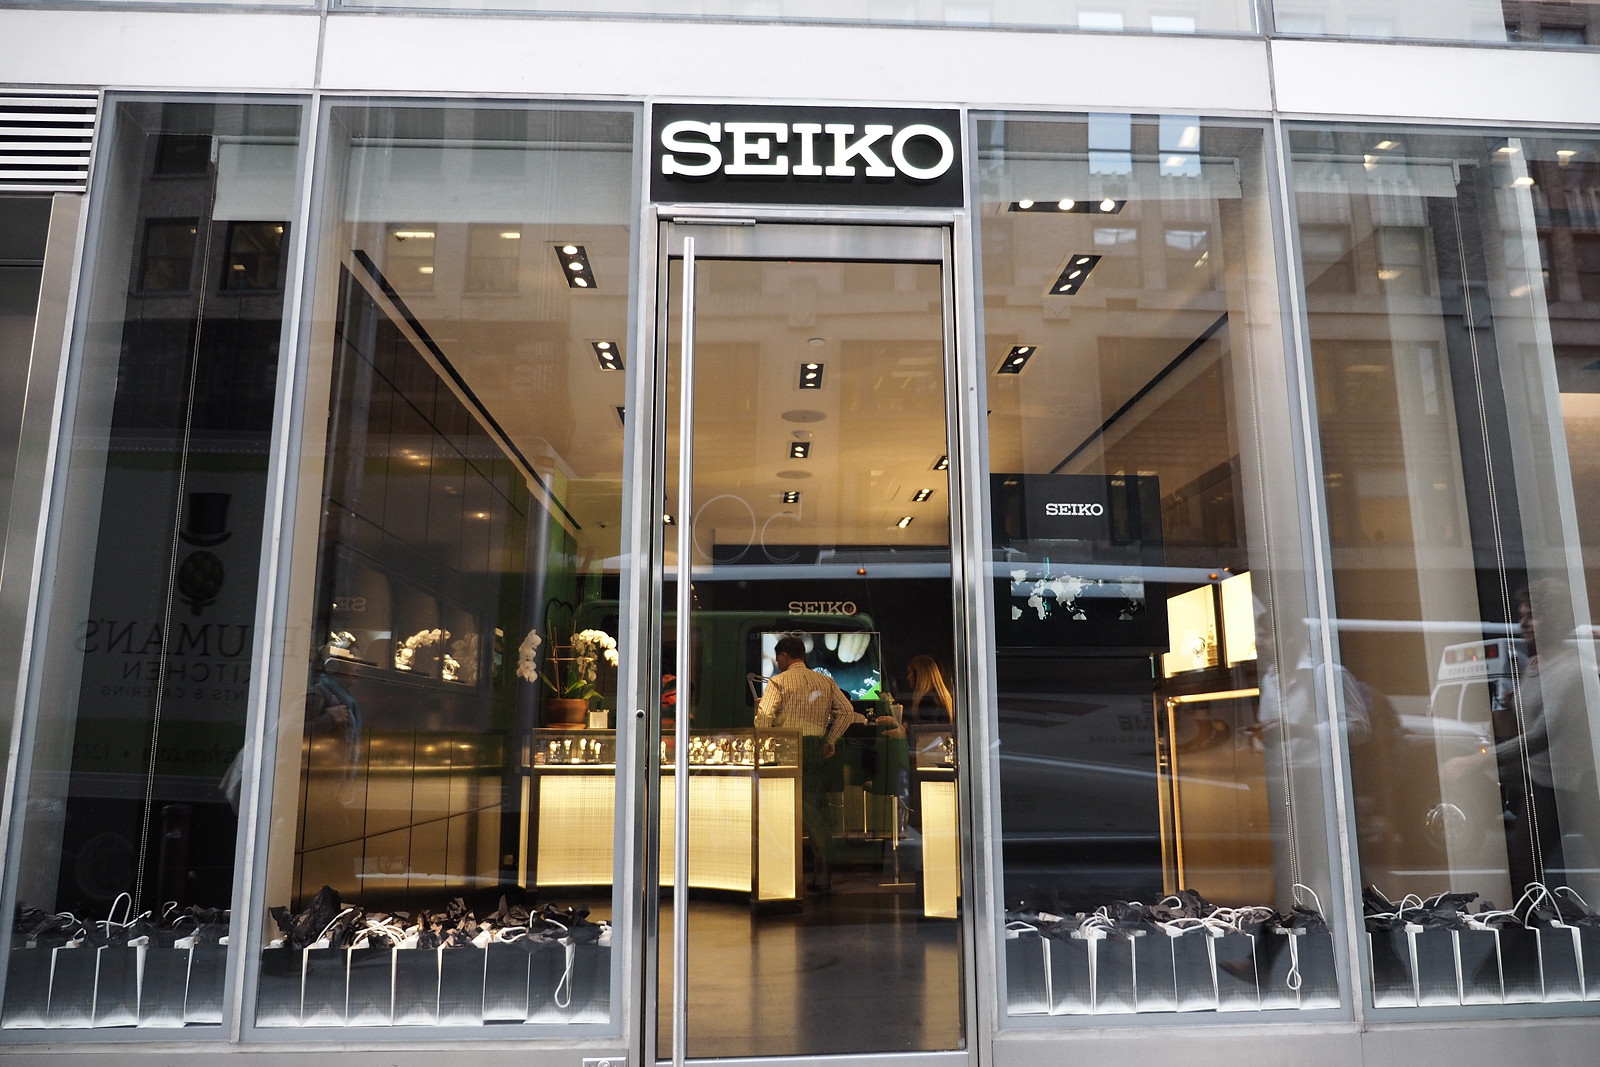 PHOTO REPORT: Seiko's new high-end Madison Avenue boutique